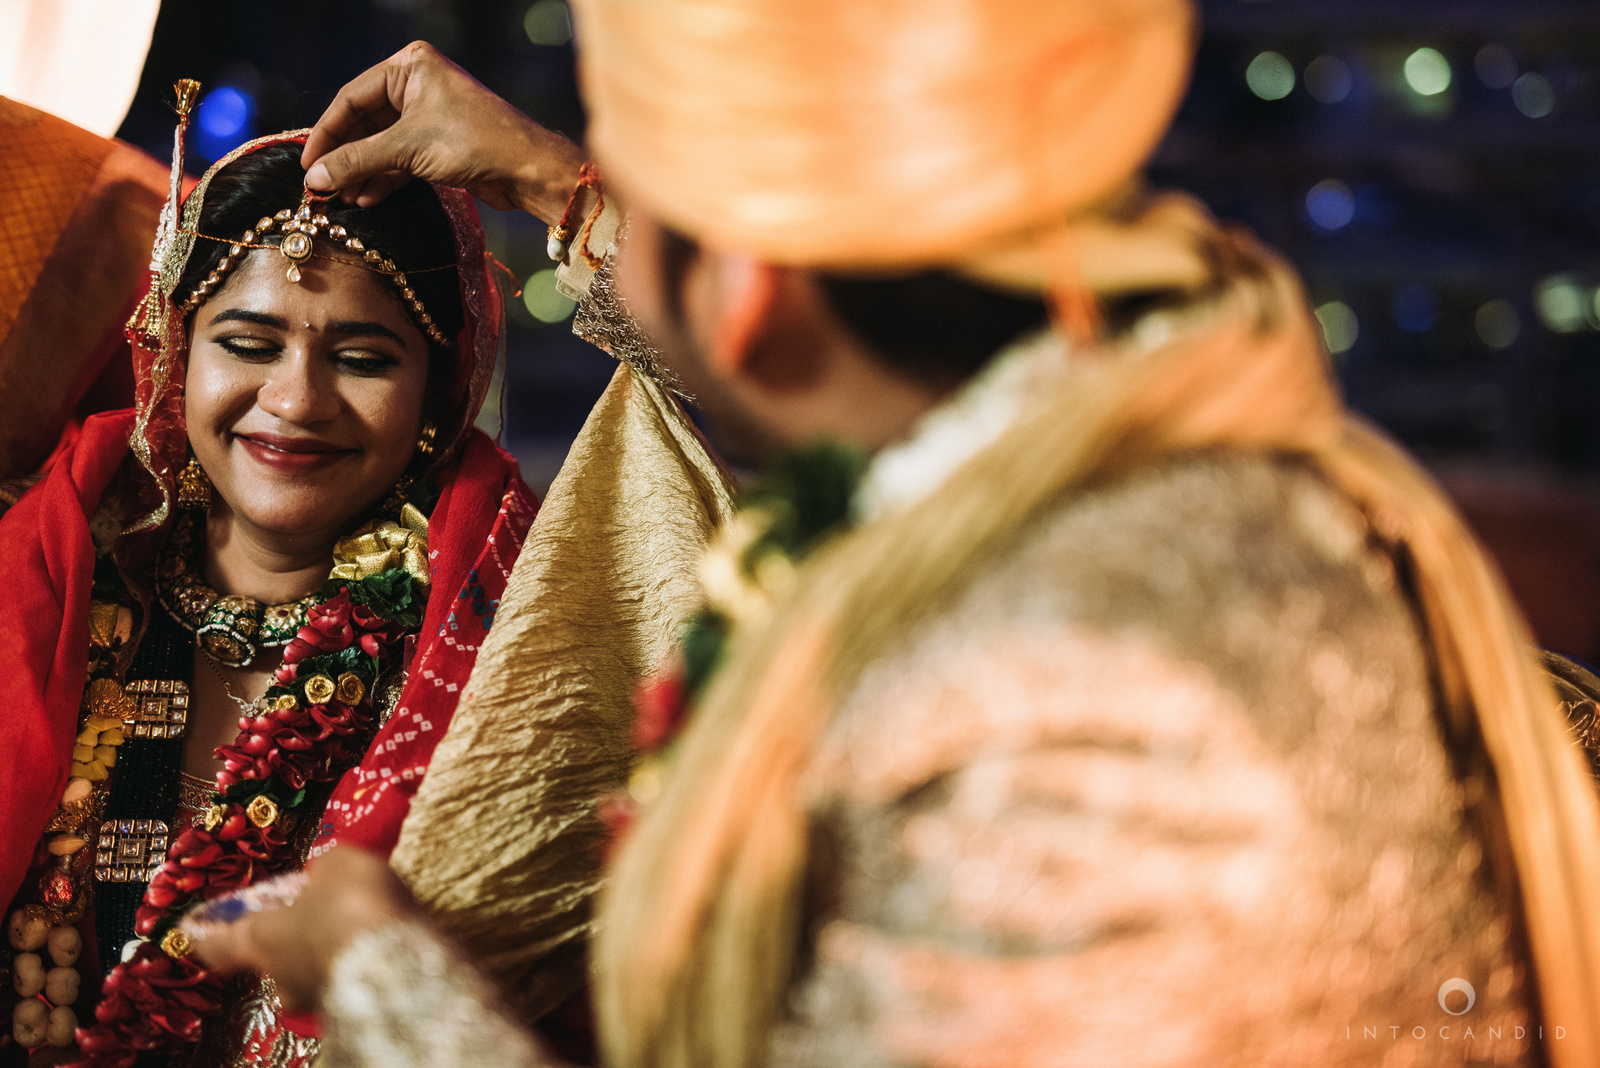 mumbai_wedding_photographer_intocandid_saharastar_ketan_manasvi_ts_032.jpg